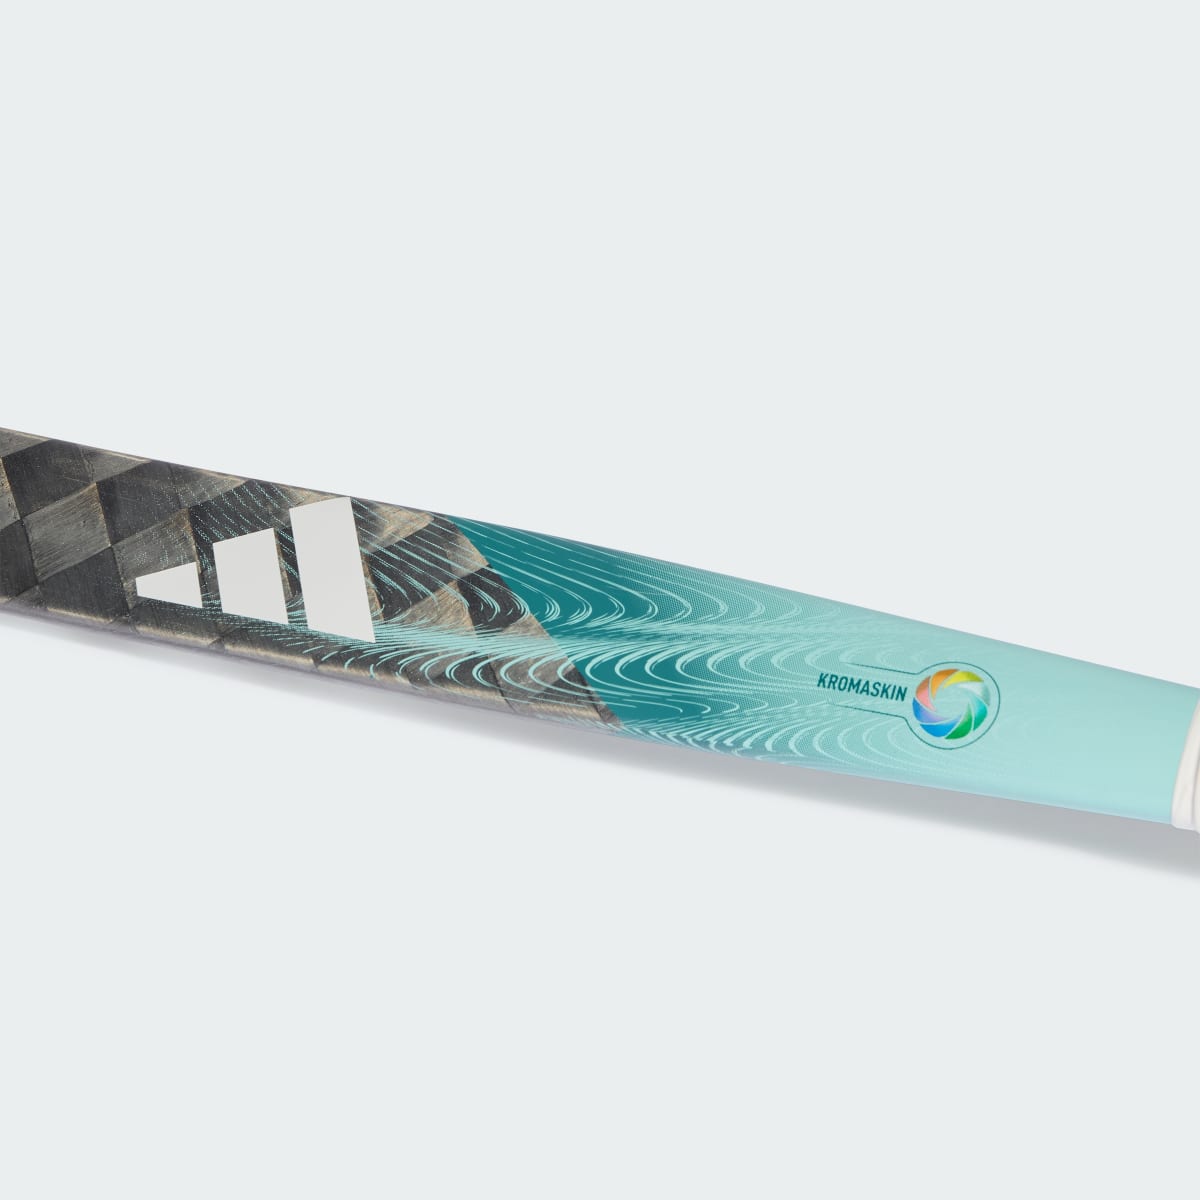 Adidas Fabela Kromaskin 92 cm Field Hockey Stick. 5